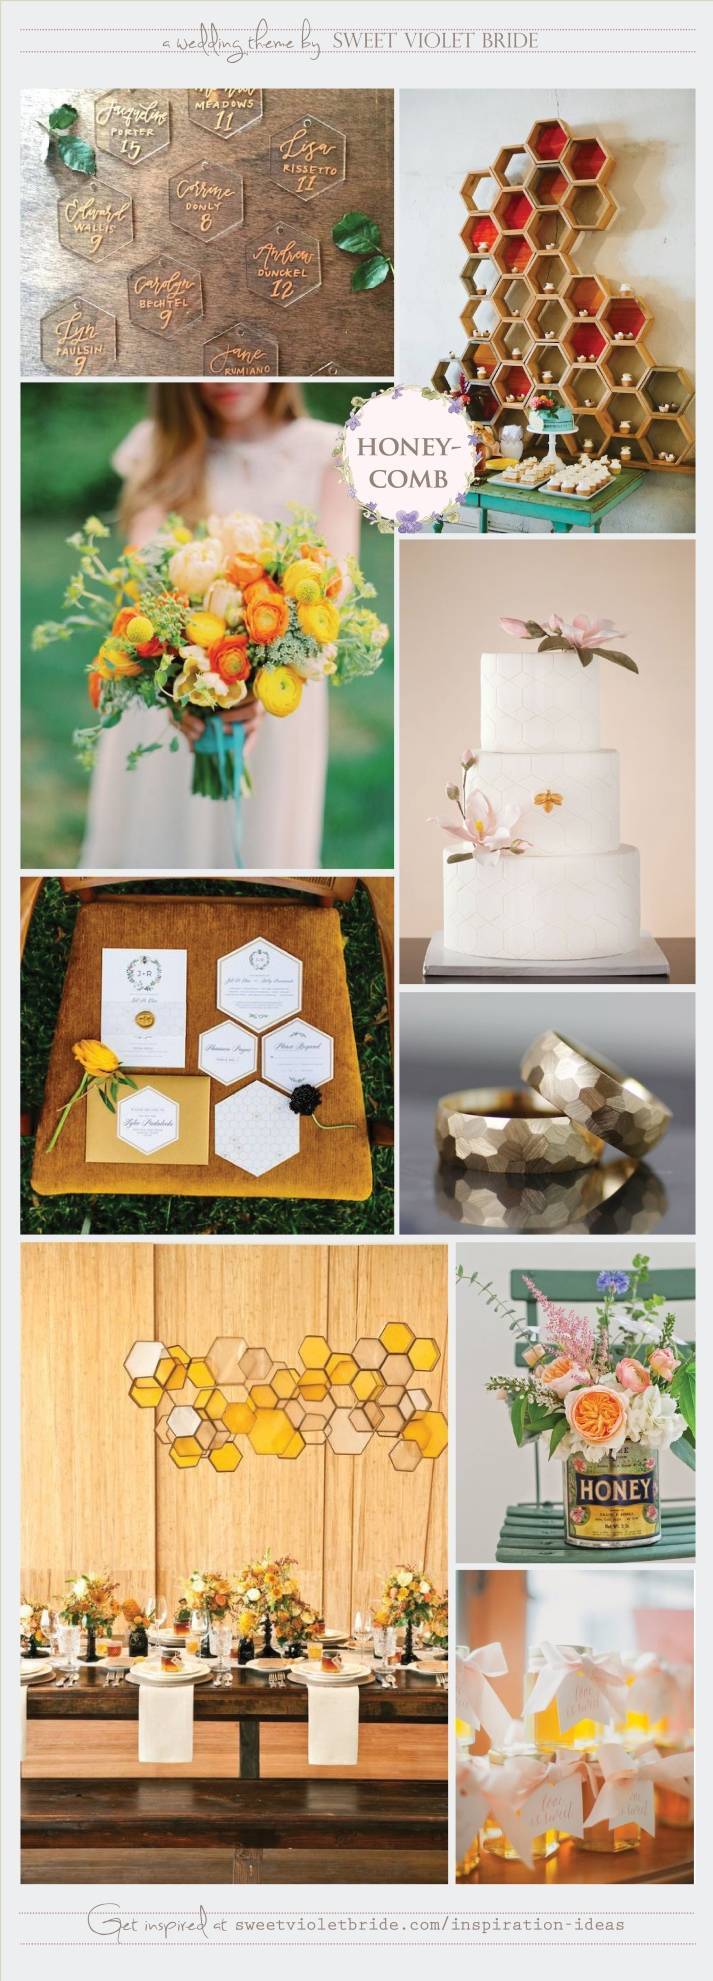 Wedding Inspiration Board #33: Honeycomb 5